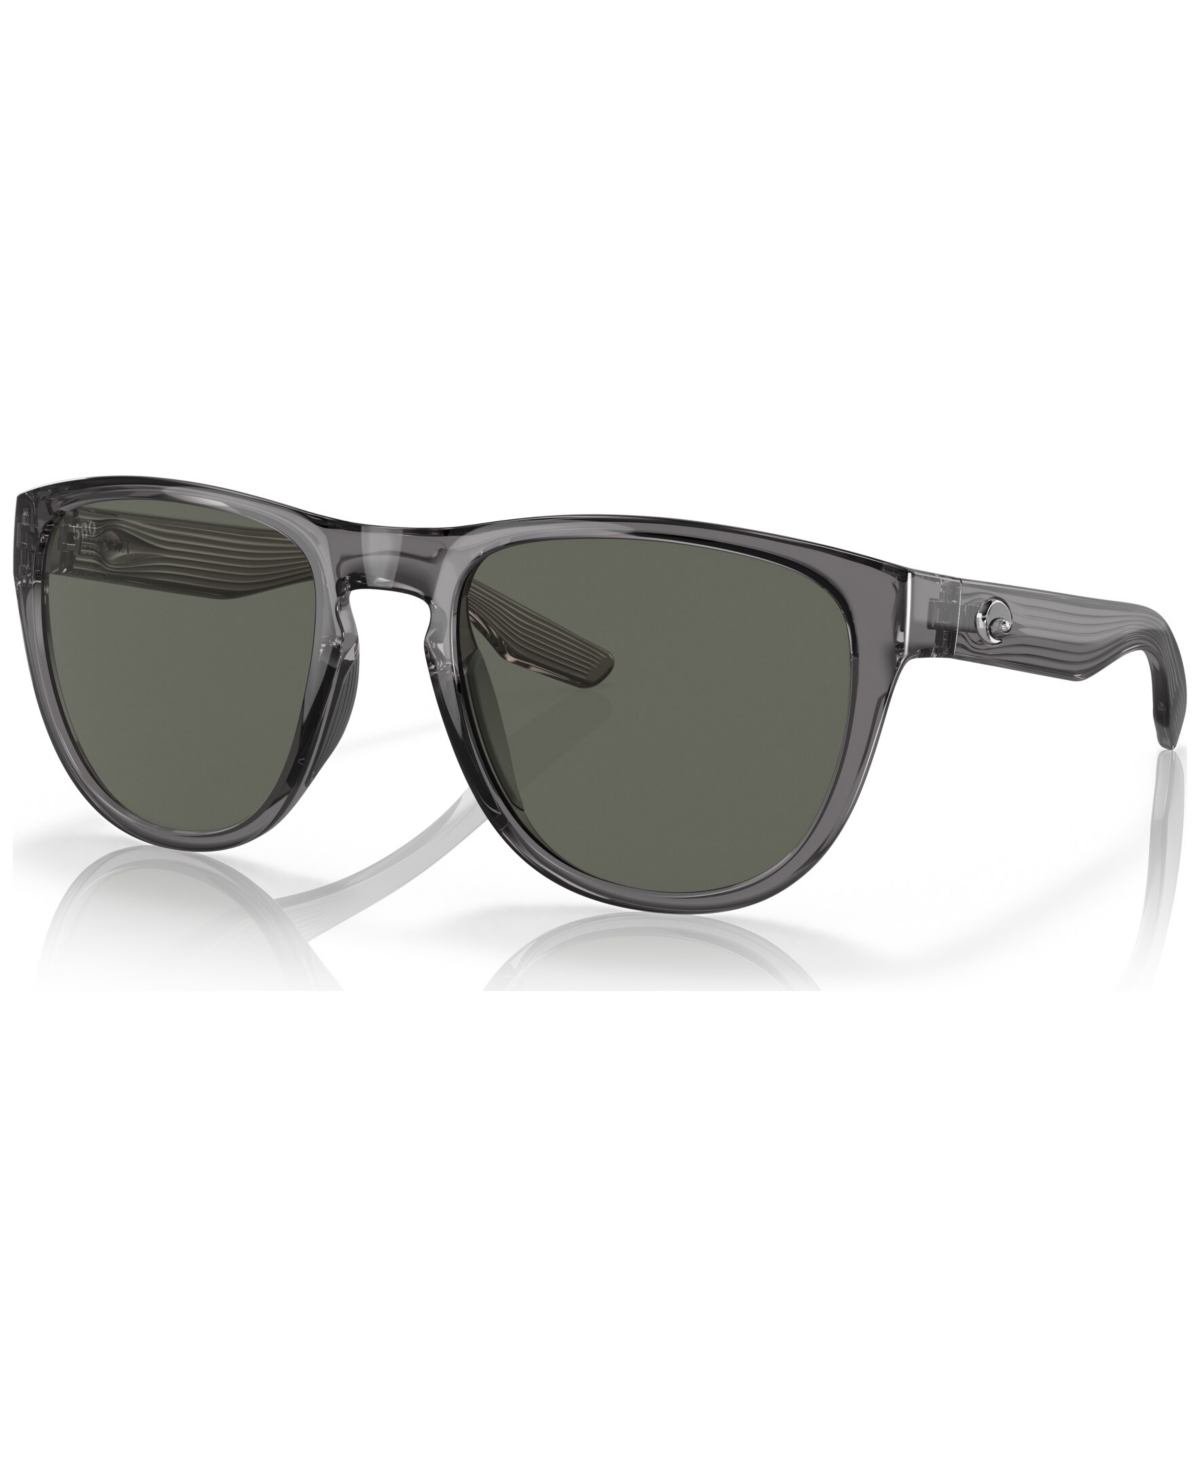 Unisex Polarized Sunglasses, 6S908255-p - Gray Crystal